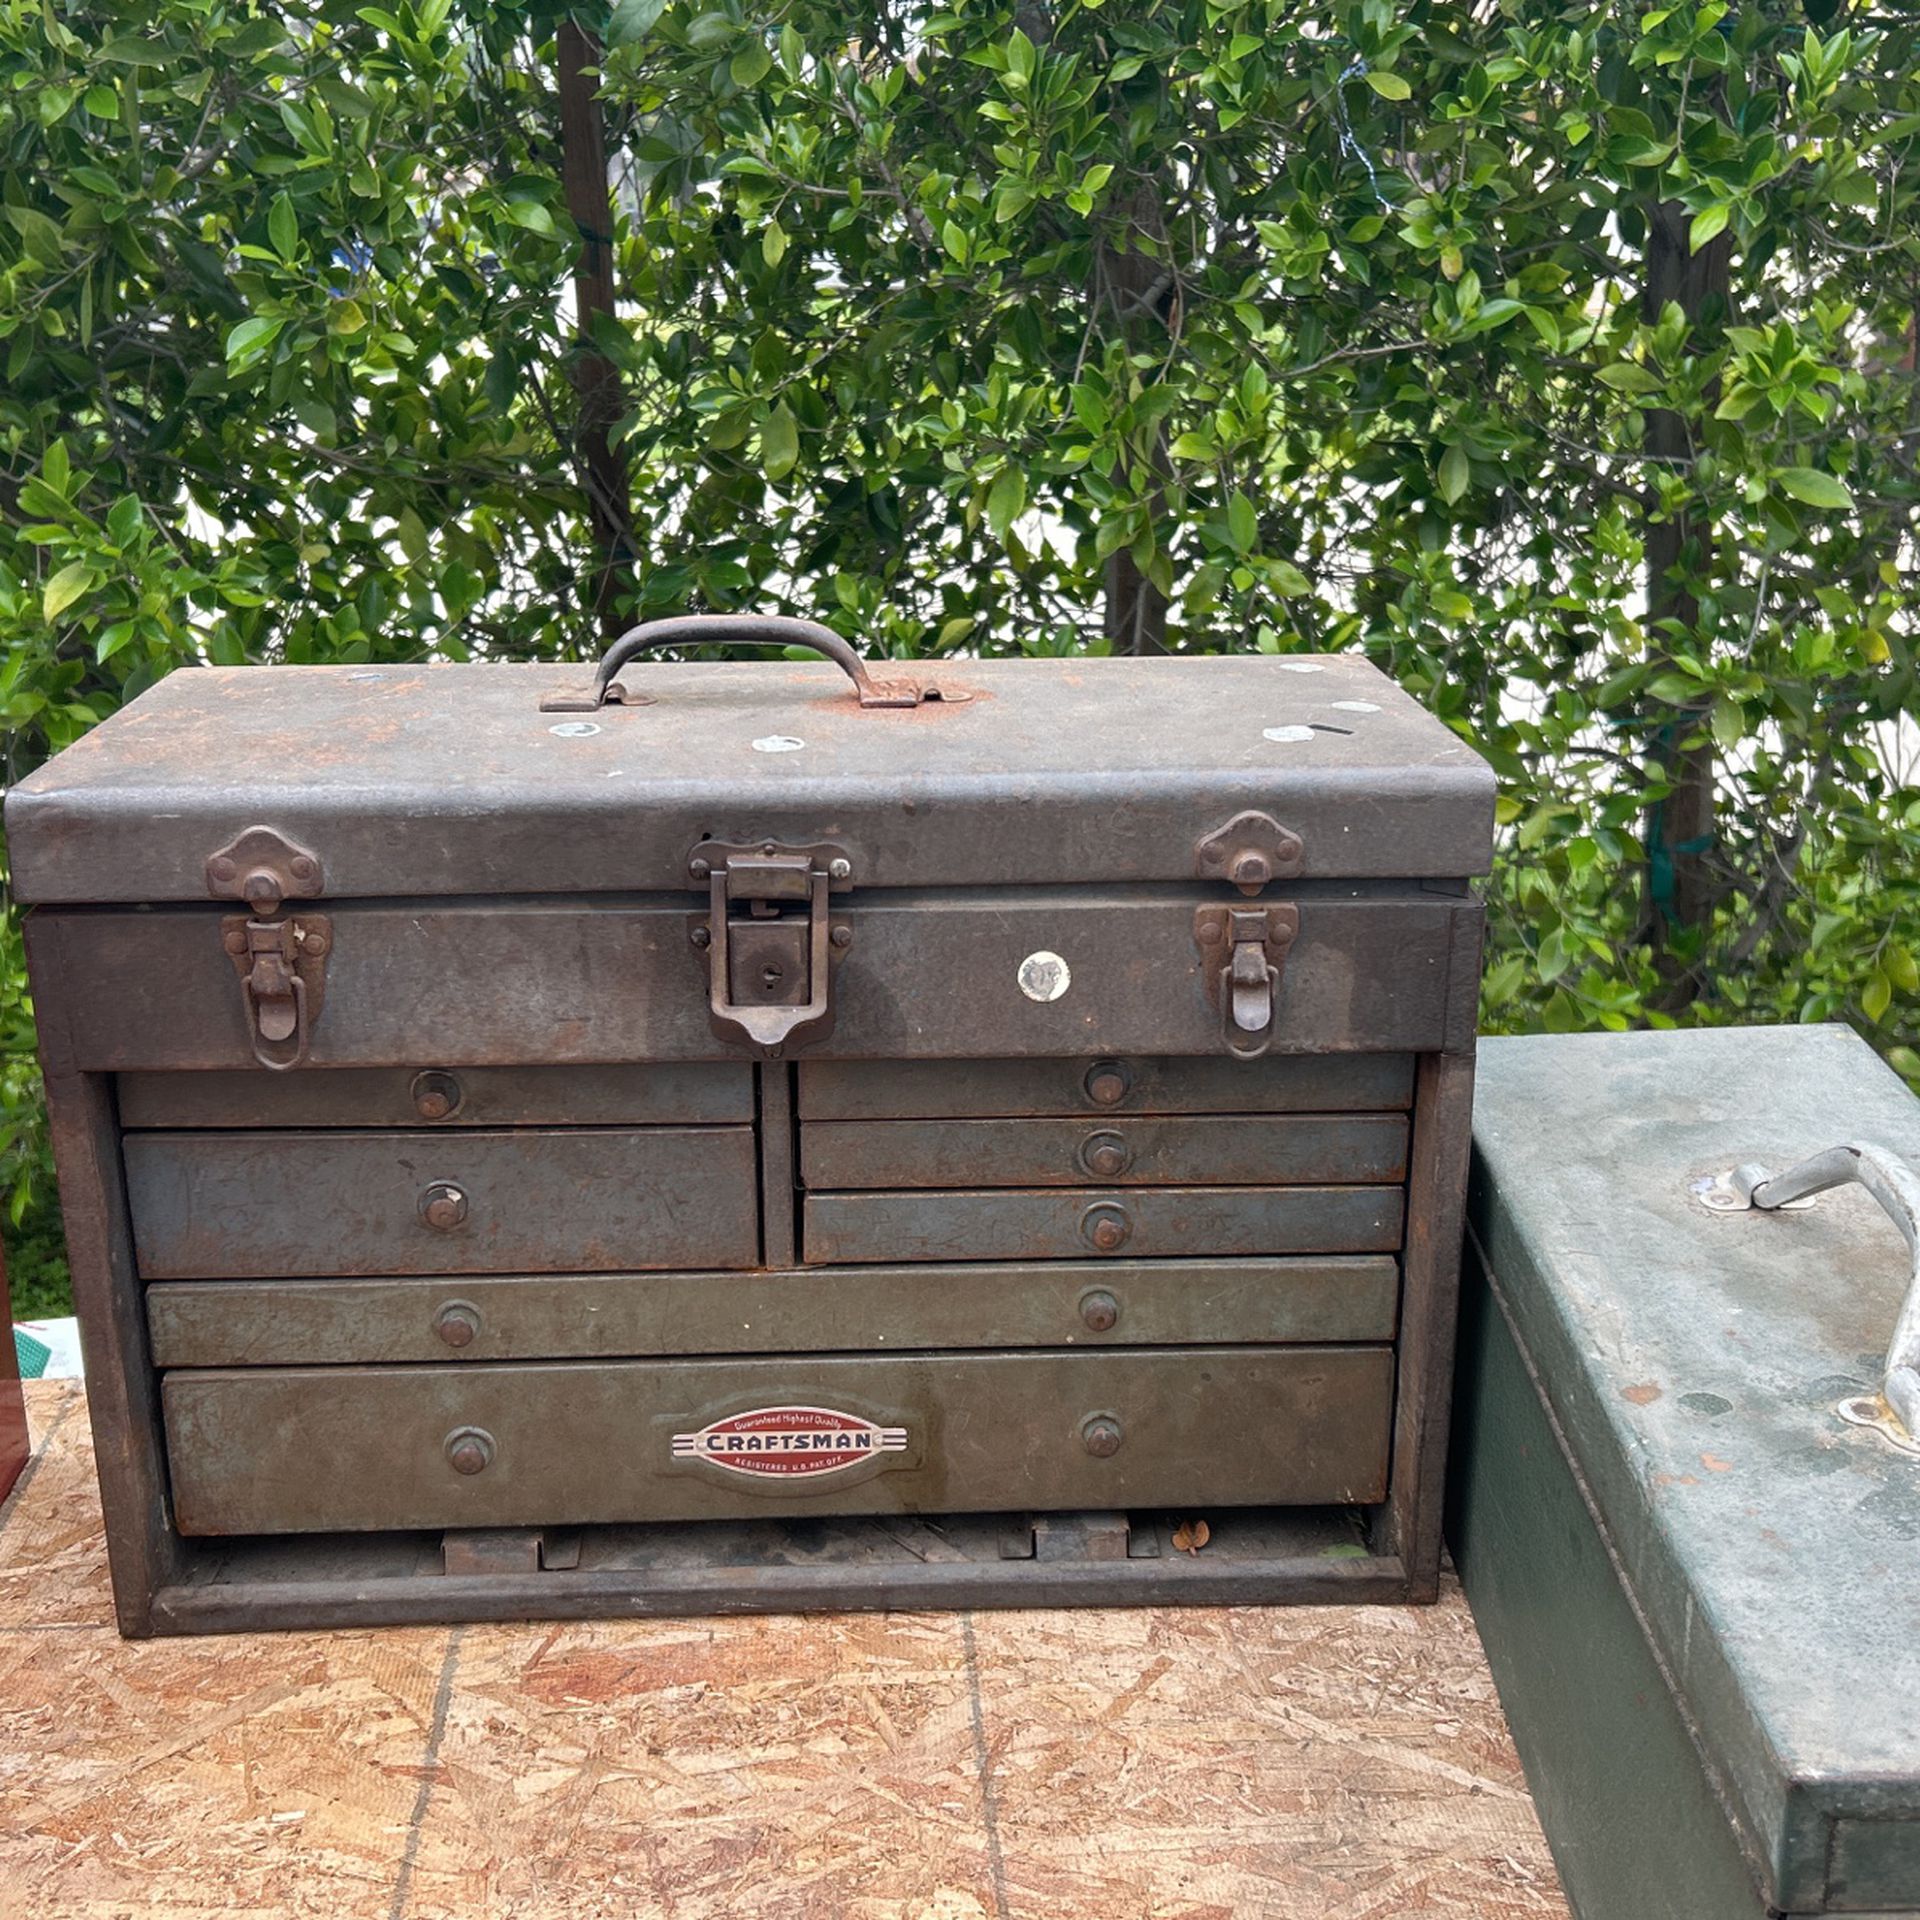 Craftsman Old school tool box